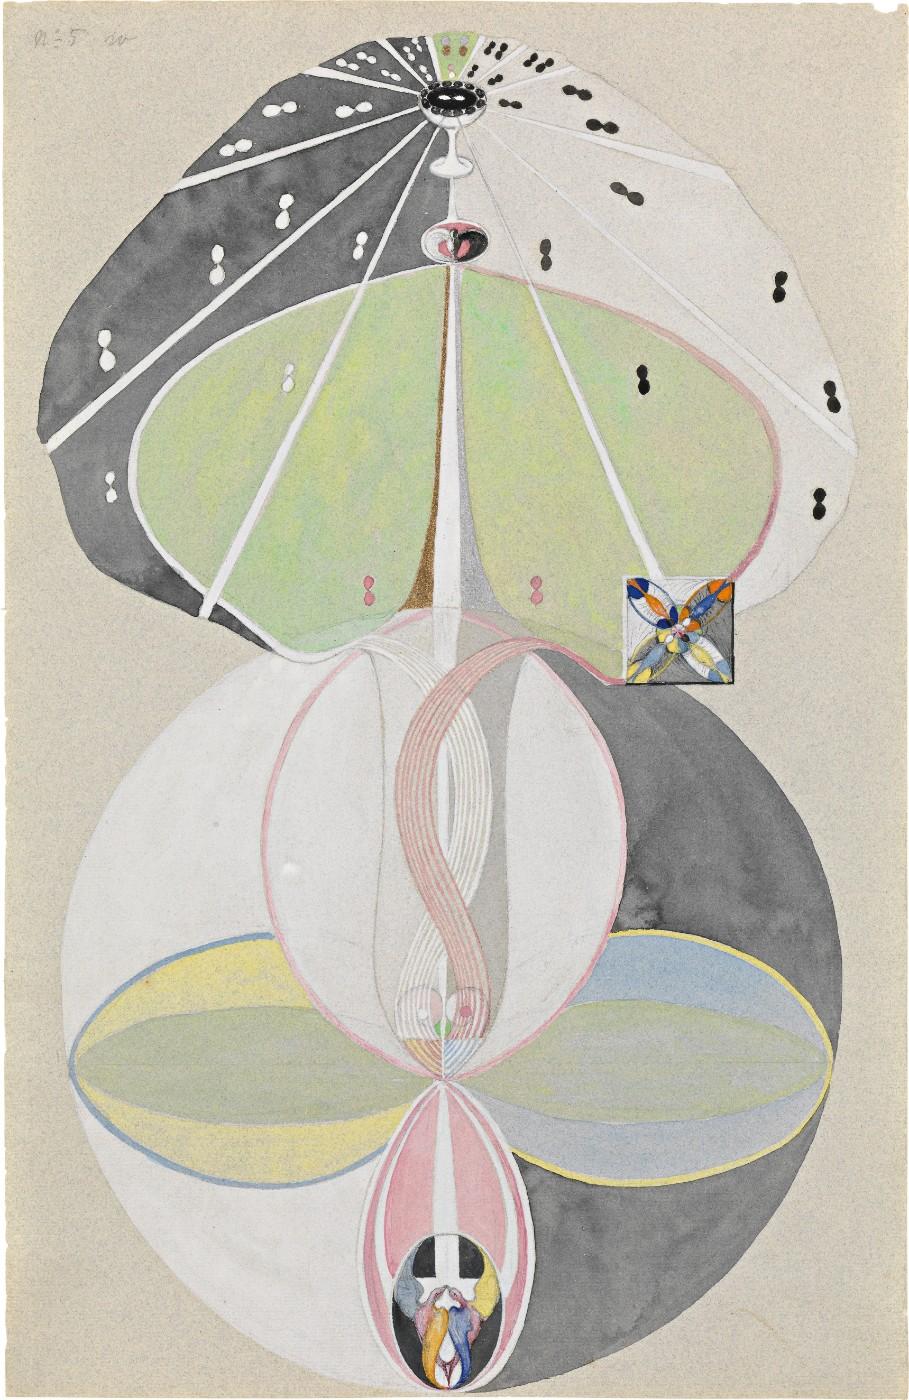 Hilma af Klint, Tree of Knowledge, No. 5 (Kunskapens träd, nr 5), 1915